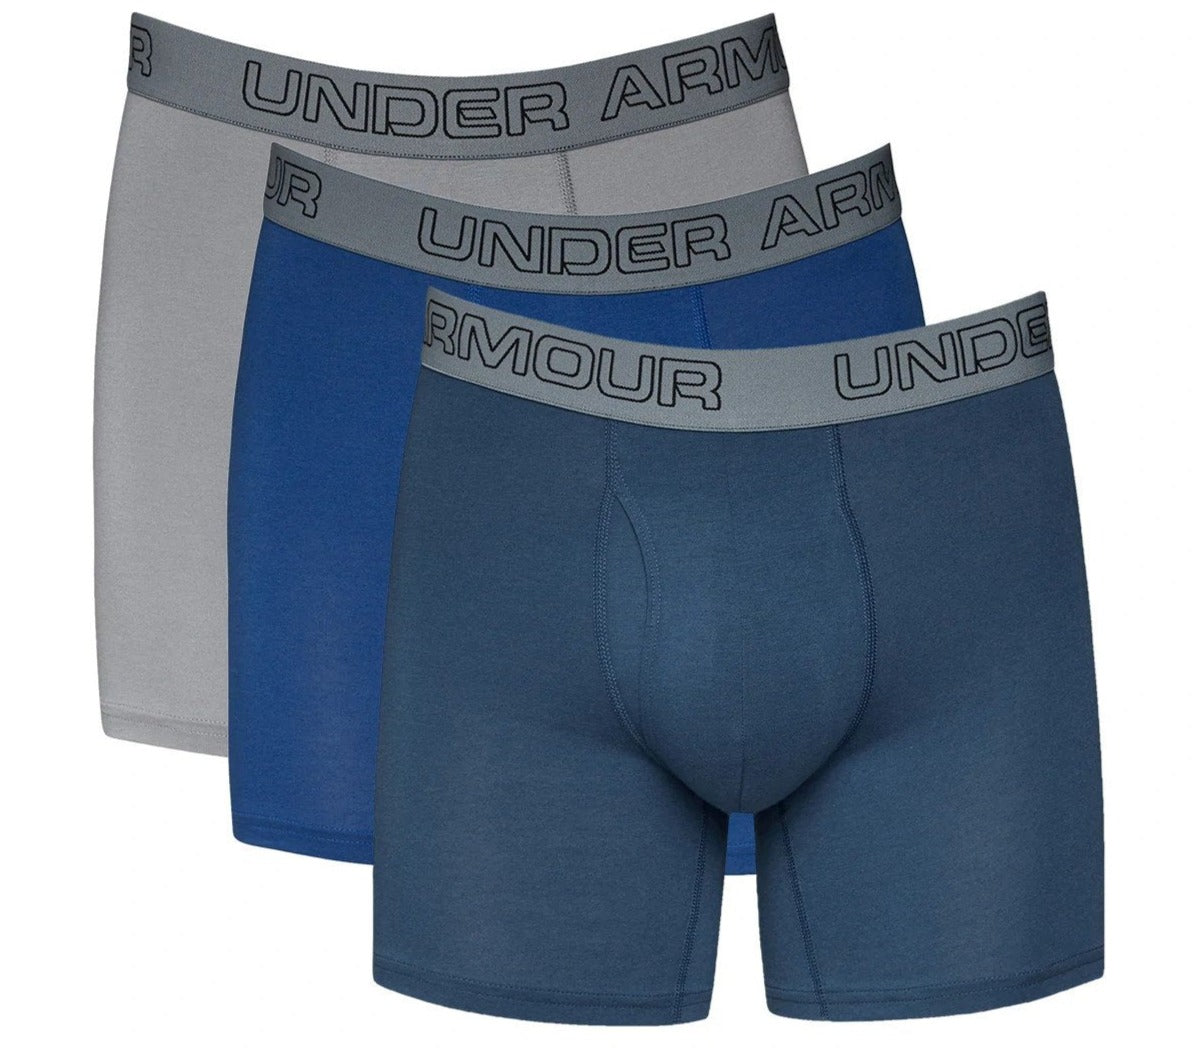 Under Armour Men's UA Charged Cotton 6" Boxerjocks 3-Pack - Tech Blue/Indigo/Steel